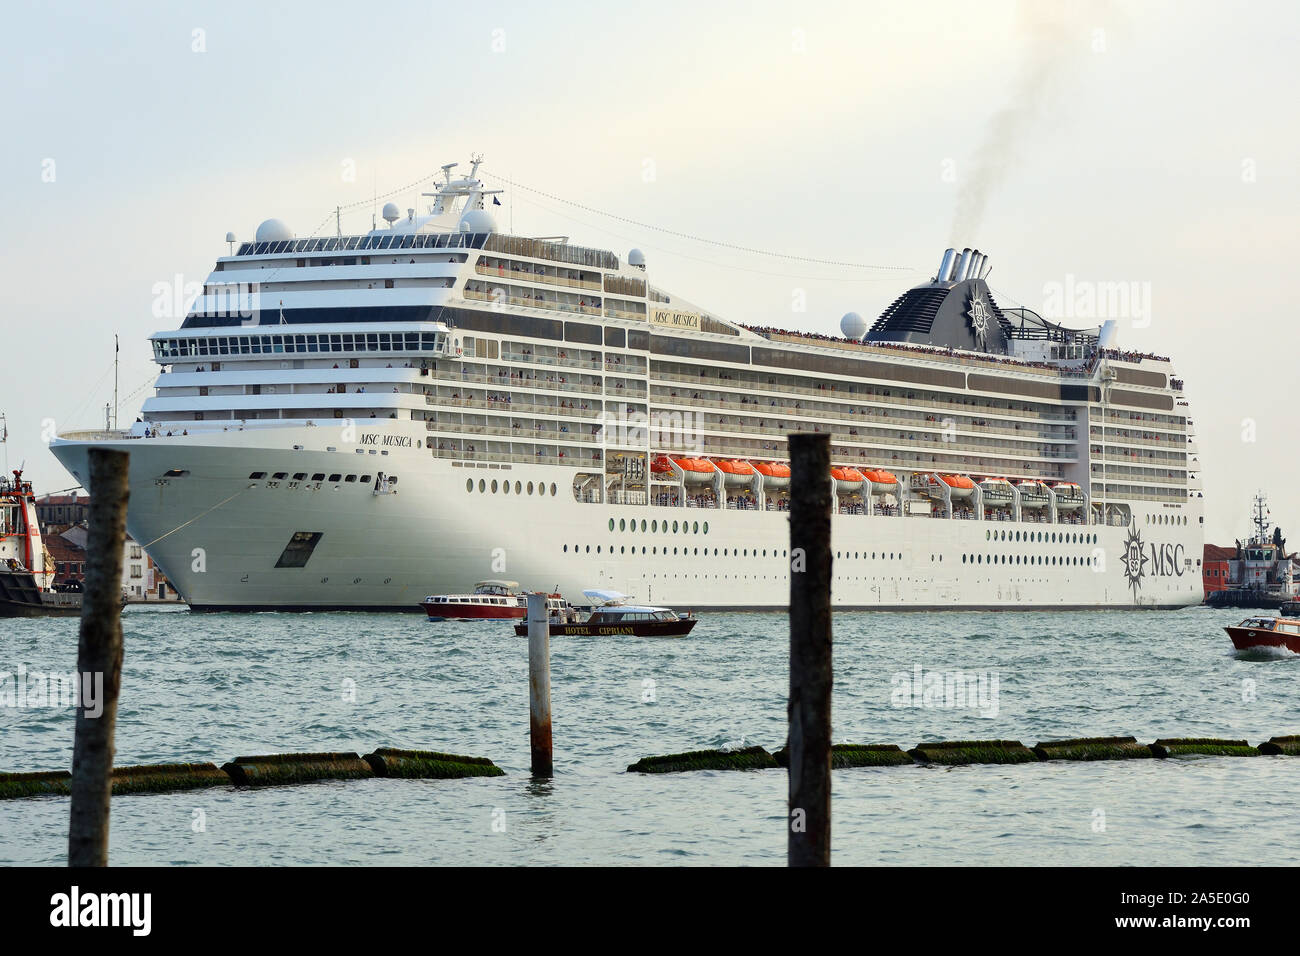 Cruise ship in the Lagoon of Venice - Italy. Stock Photo